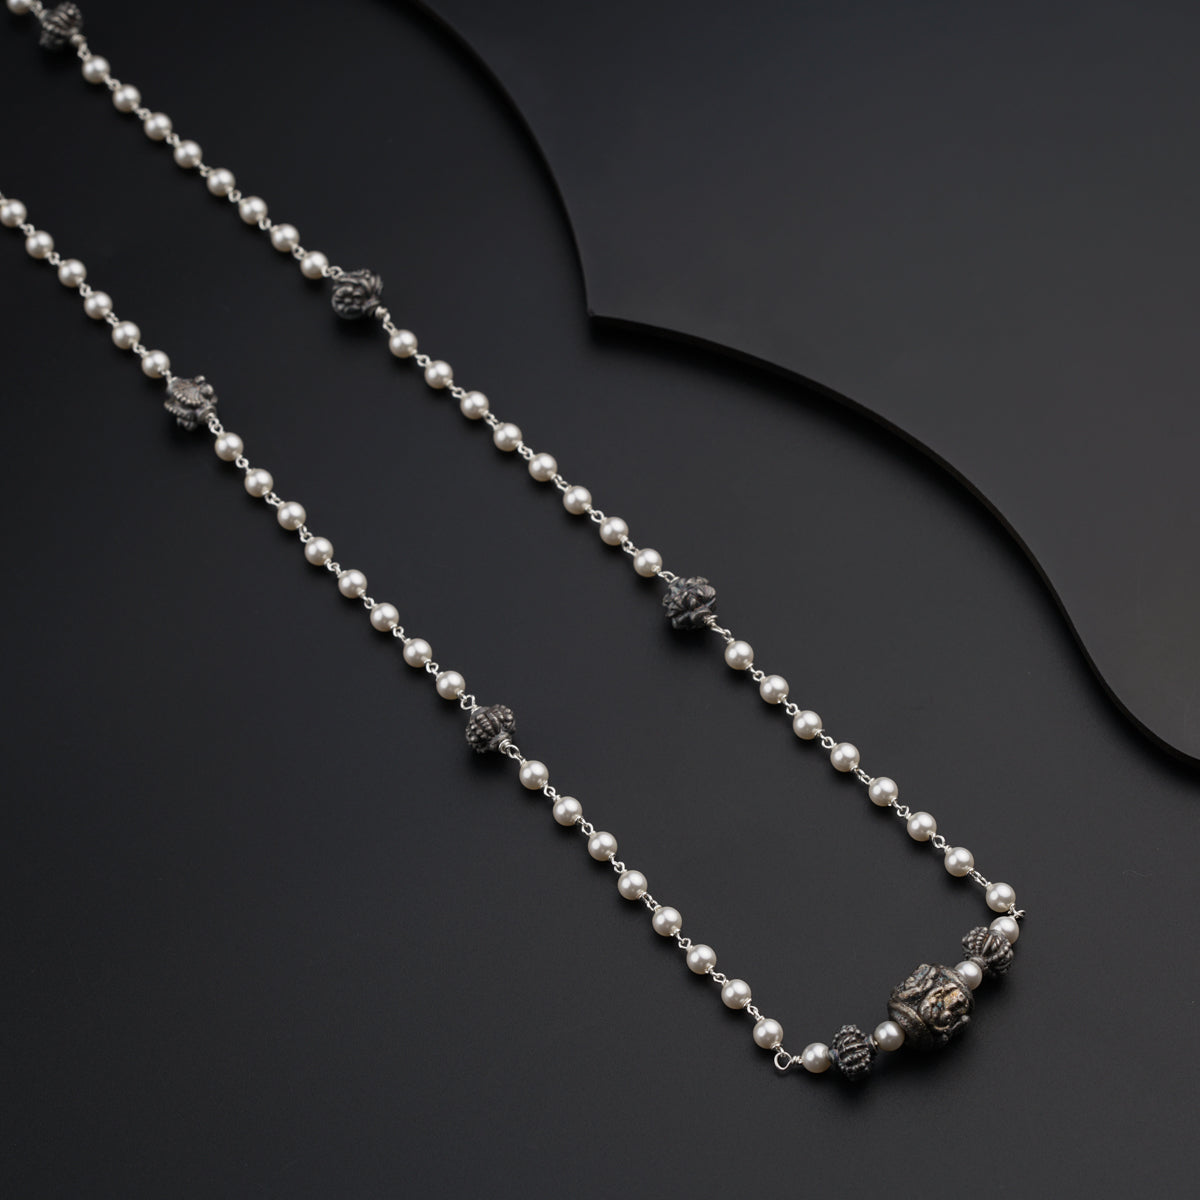 Polished Sterling Silver Bead Necklace by Al Joe - Navajo Jewelry